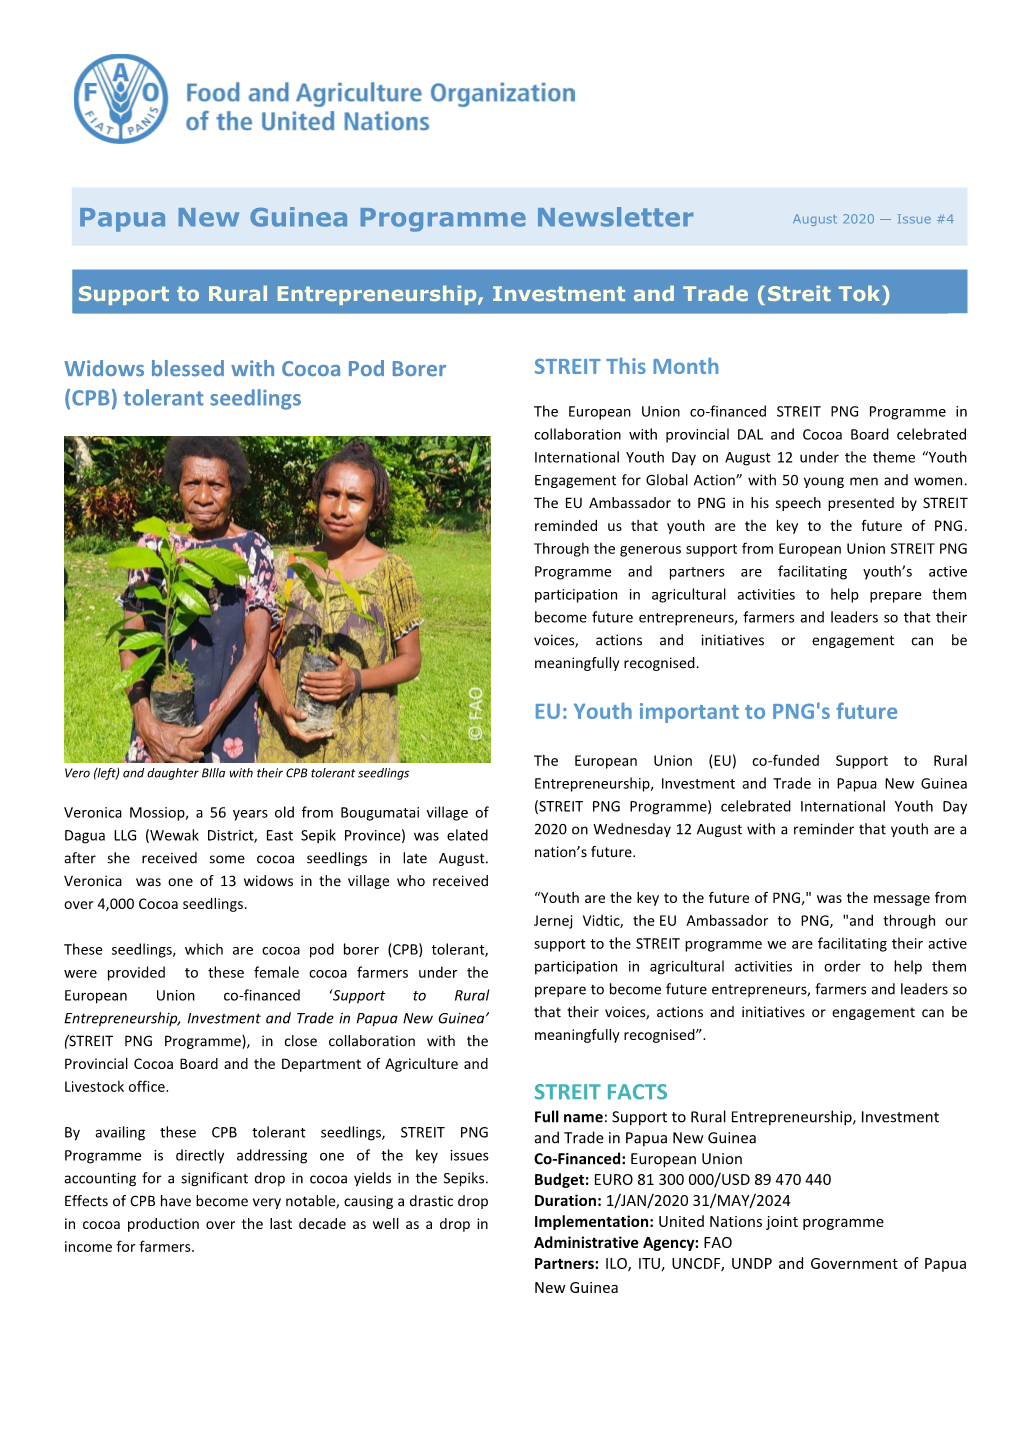 Papua New Guinea Programme Newsletter, August 2020